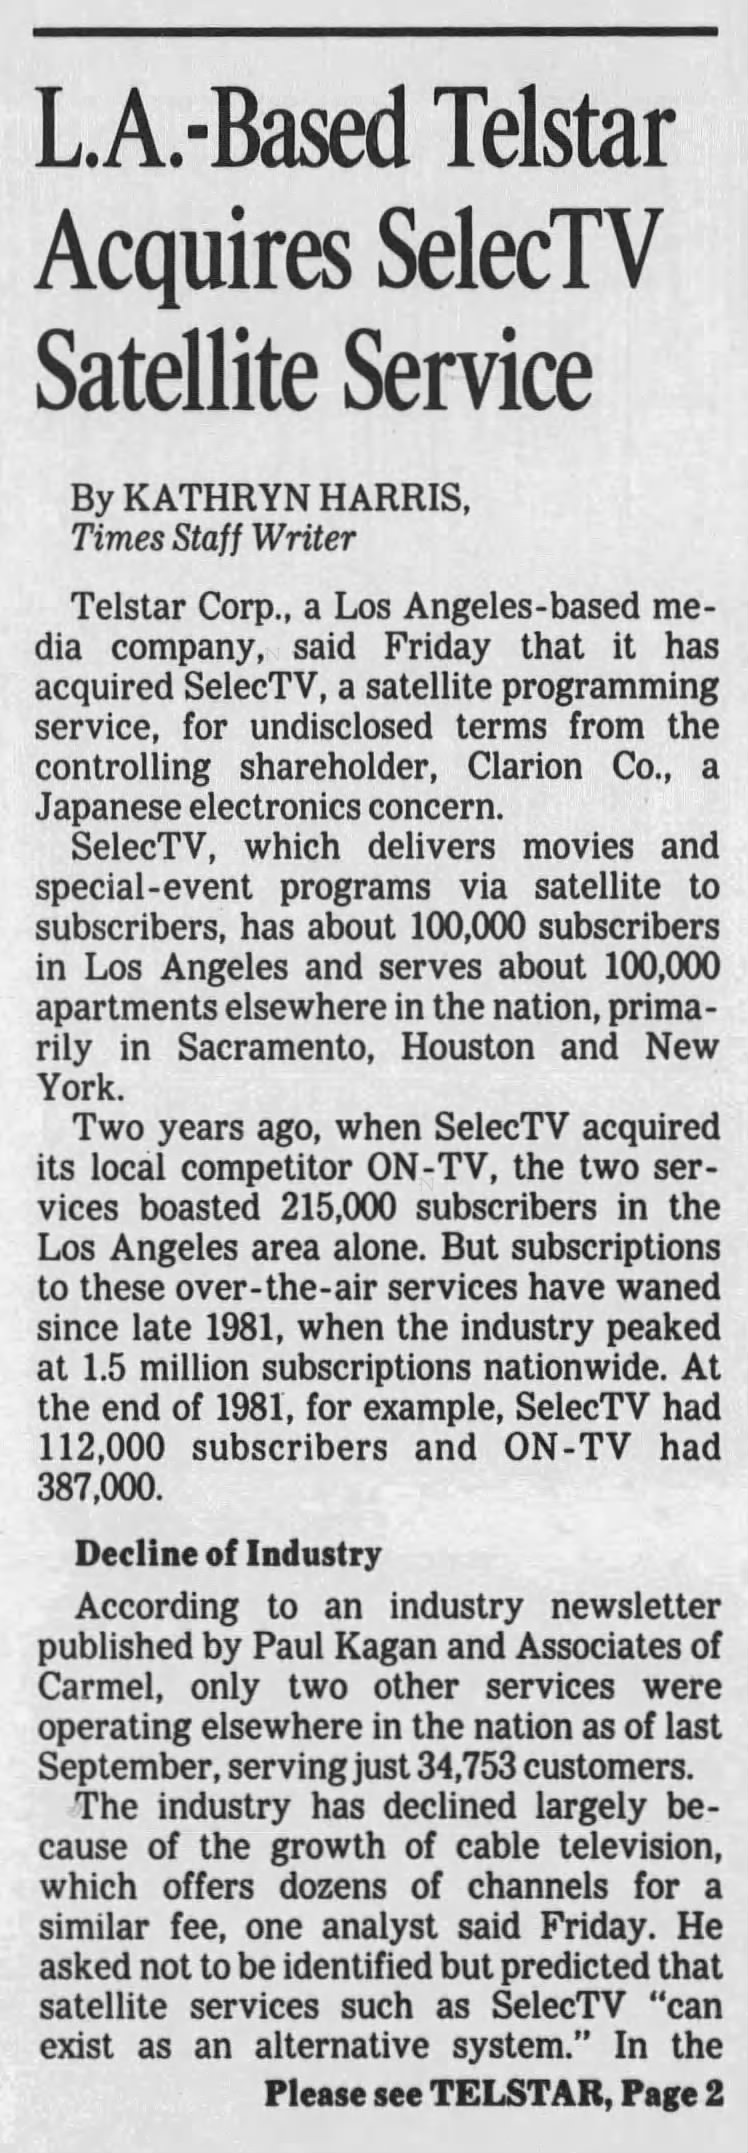 L.A.-Based Telstar Acquires SelecTV Satellite Service